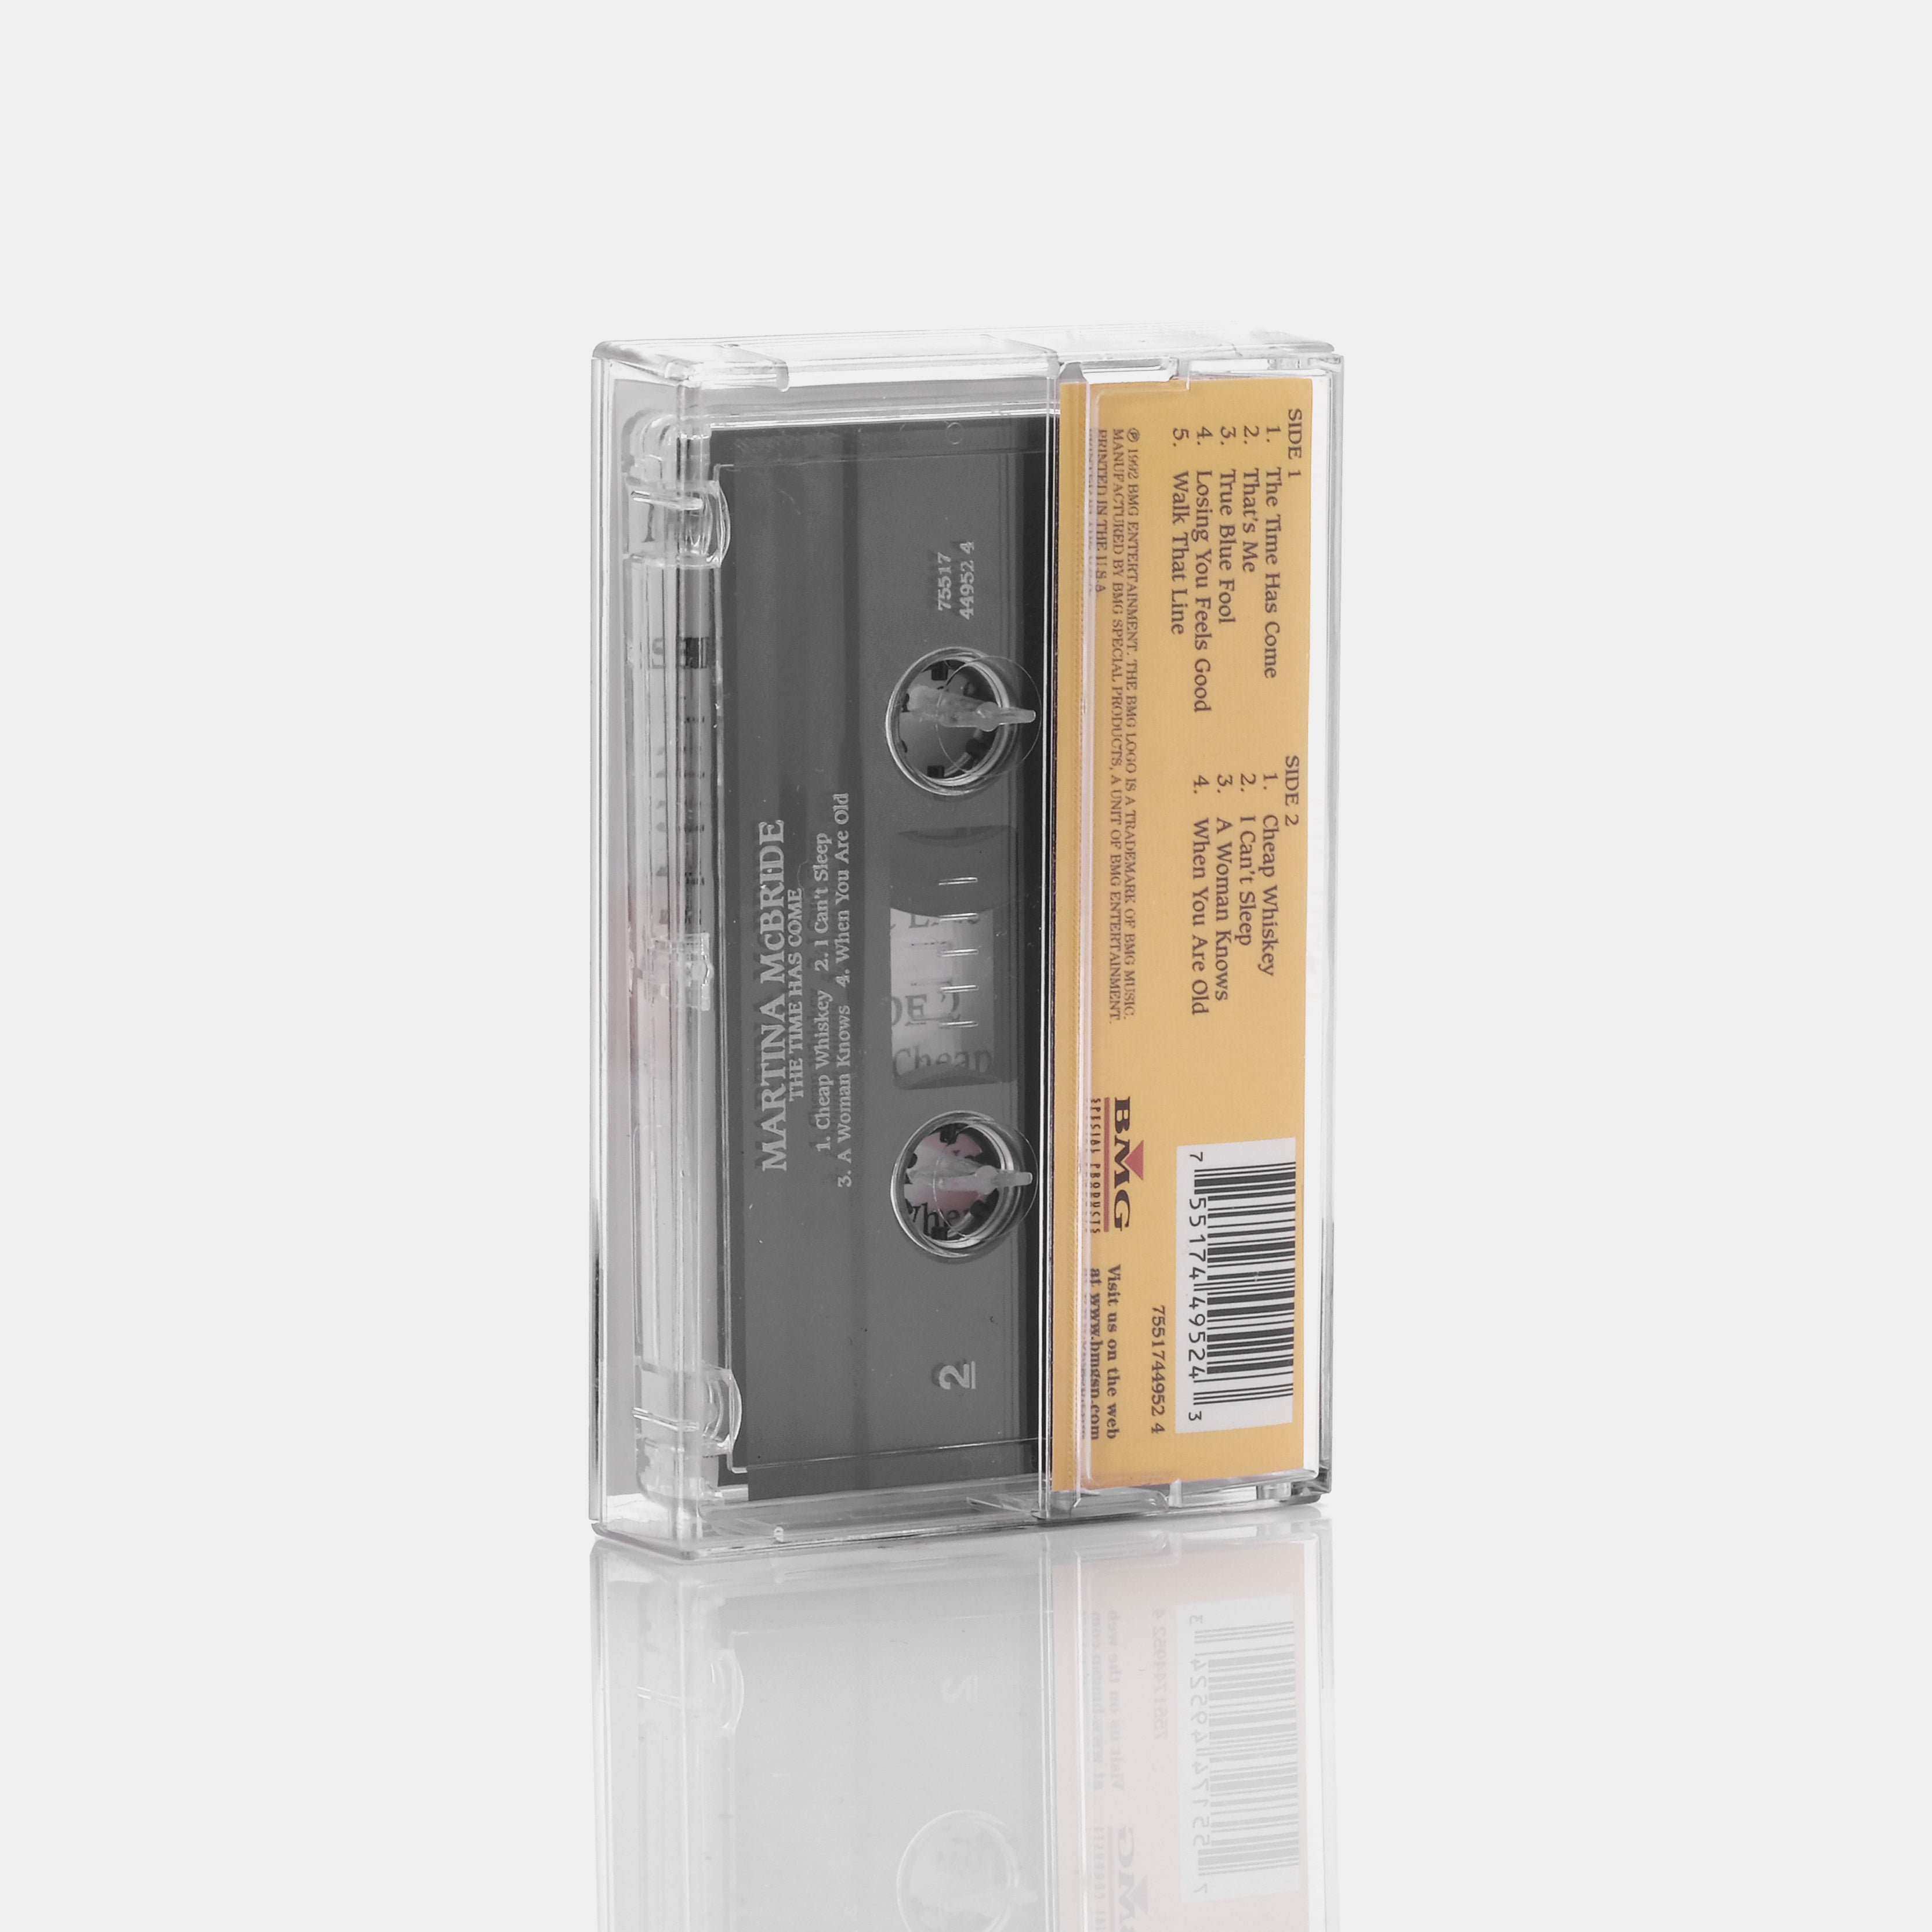 Martina McBride - The Time Has Come Cassette Tape